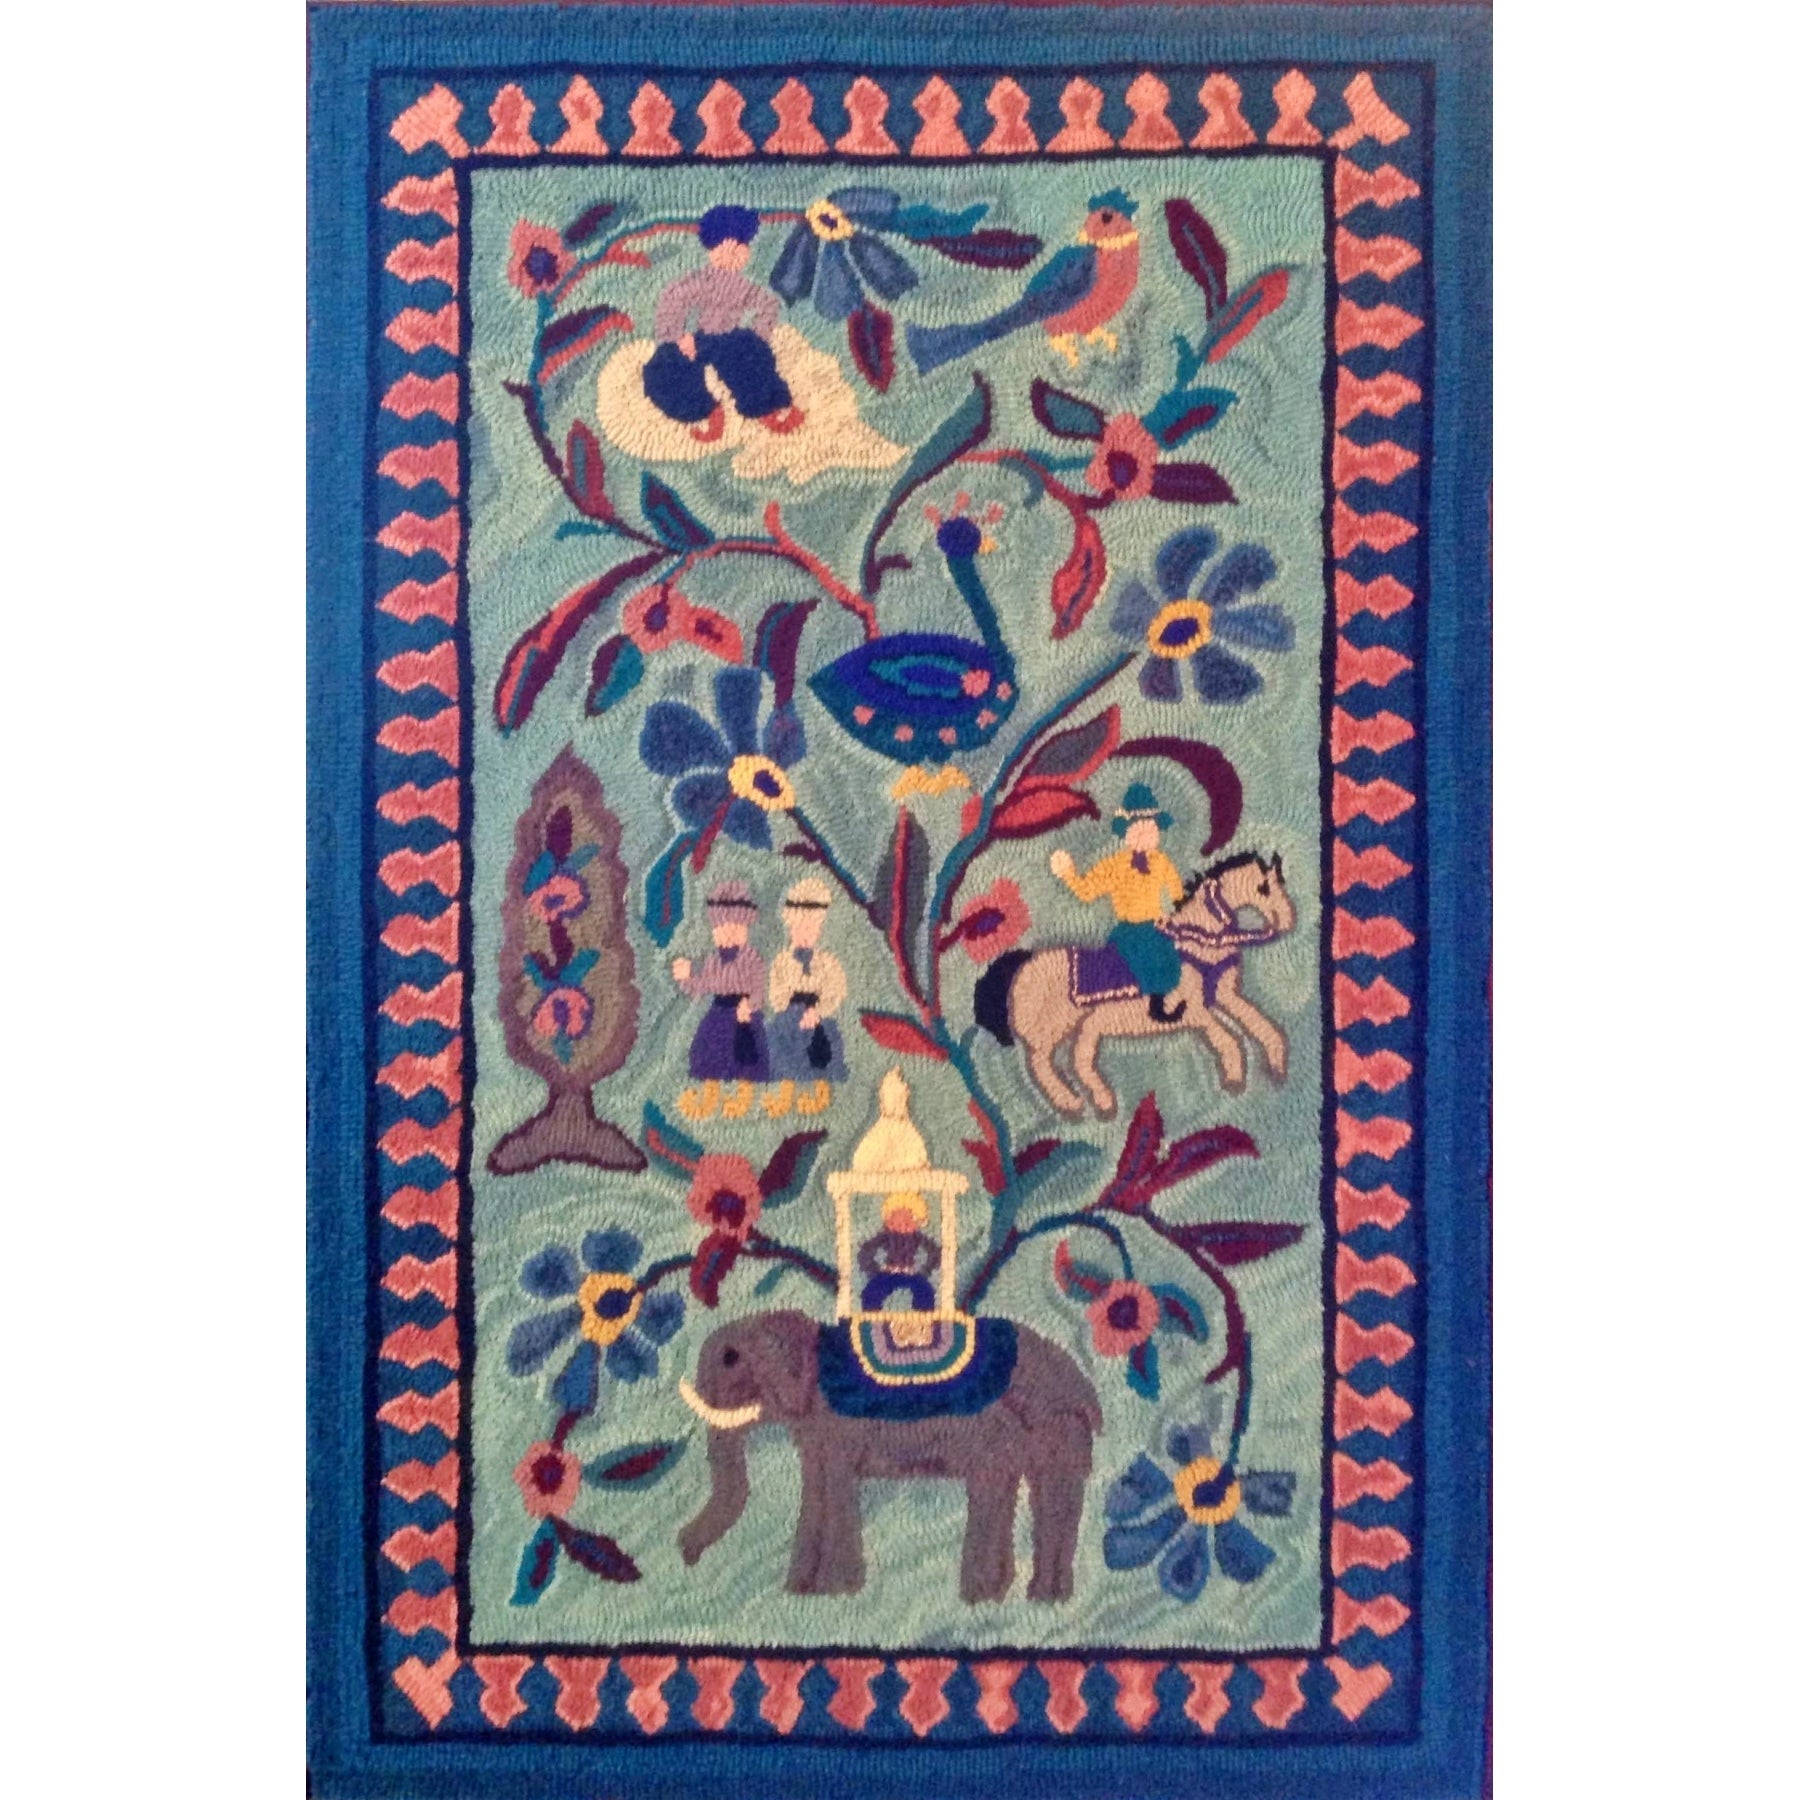 Mini-Kashani, rug hooked by Vicky Germroth